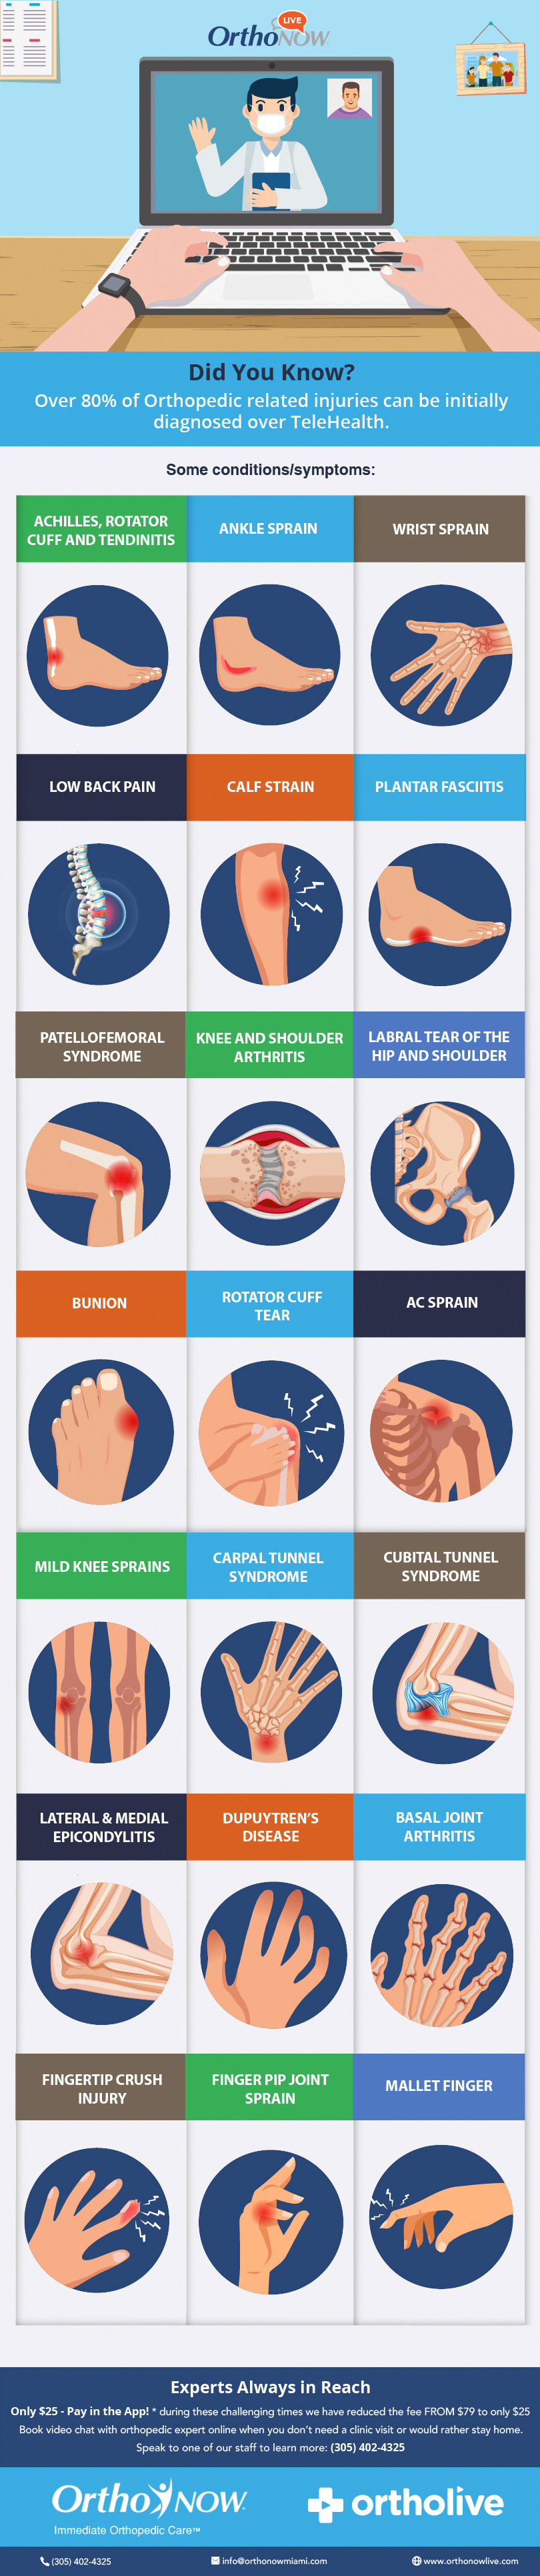 Orthopedic related injuries